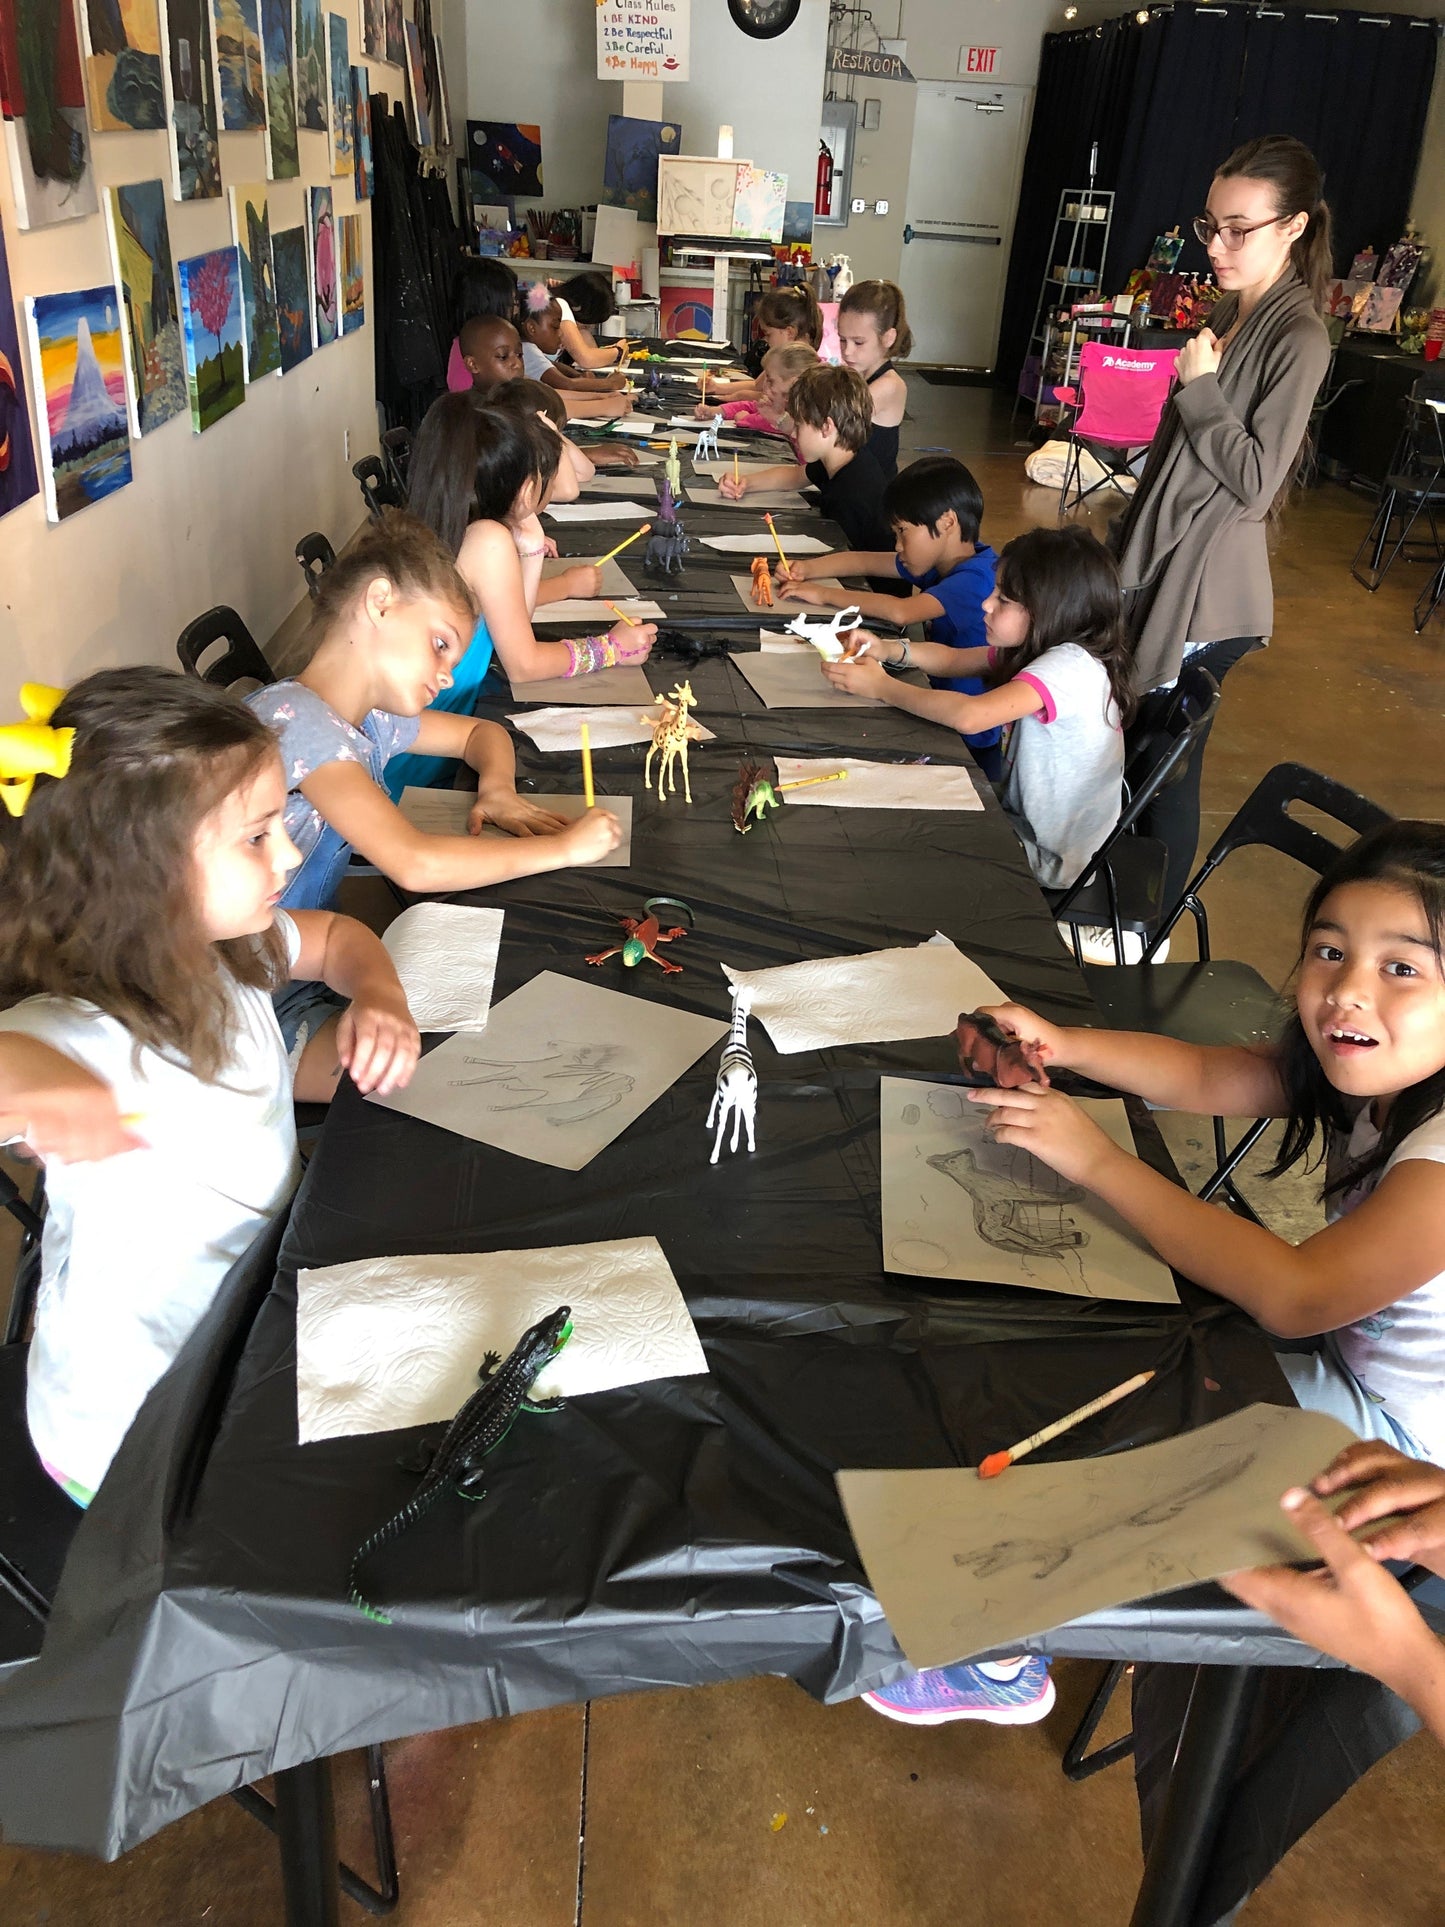 Sat, Feb 25th, 9-11A Kids Paint: “With Dots” Public Houston Painting Class